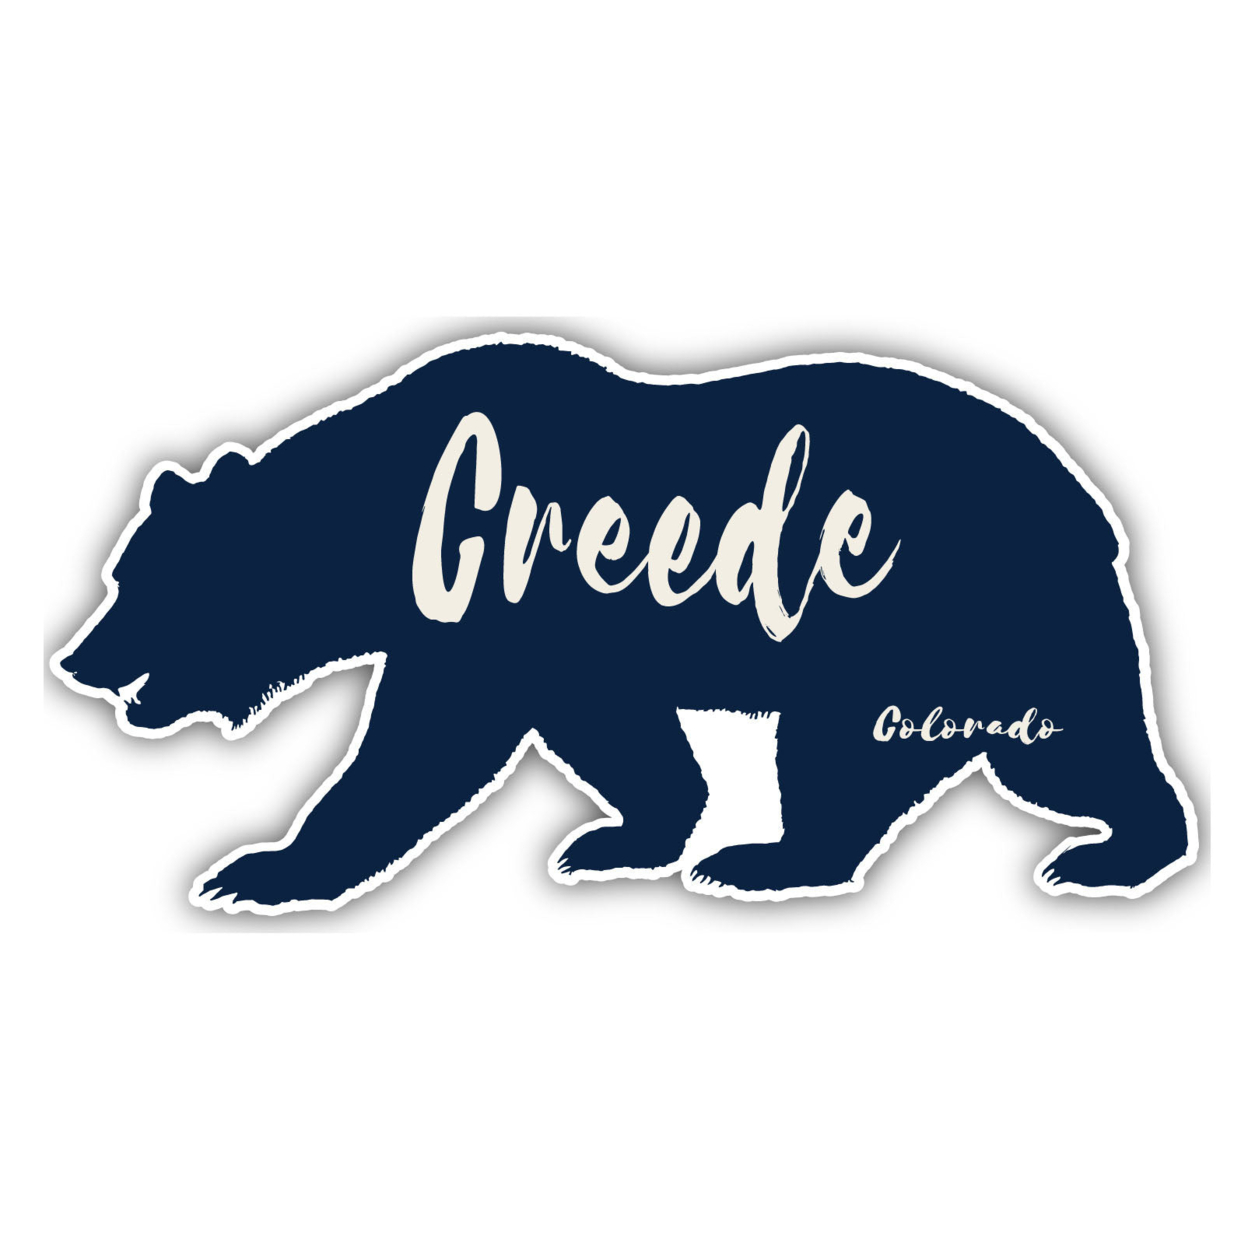 Creede Colorado Souvenir Decorative Stickers (Choose Theme And Size) - Single Unit, 2-Inch, Tent